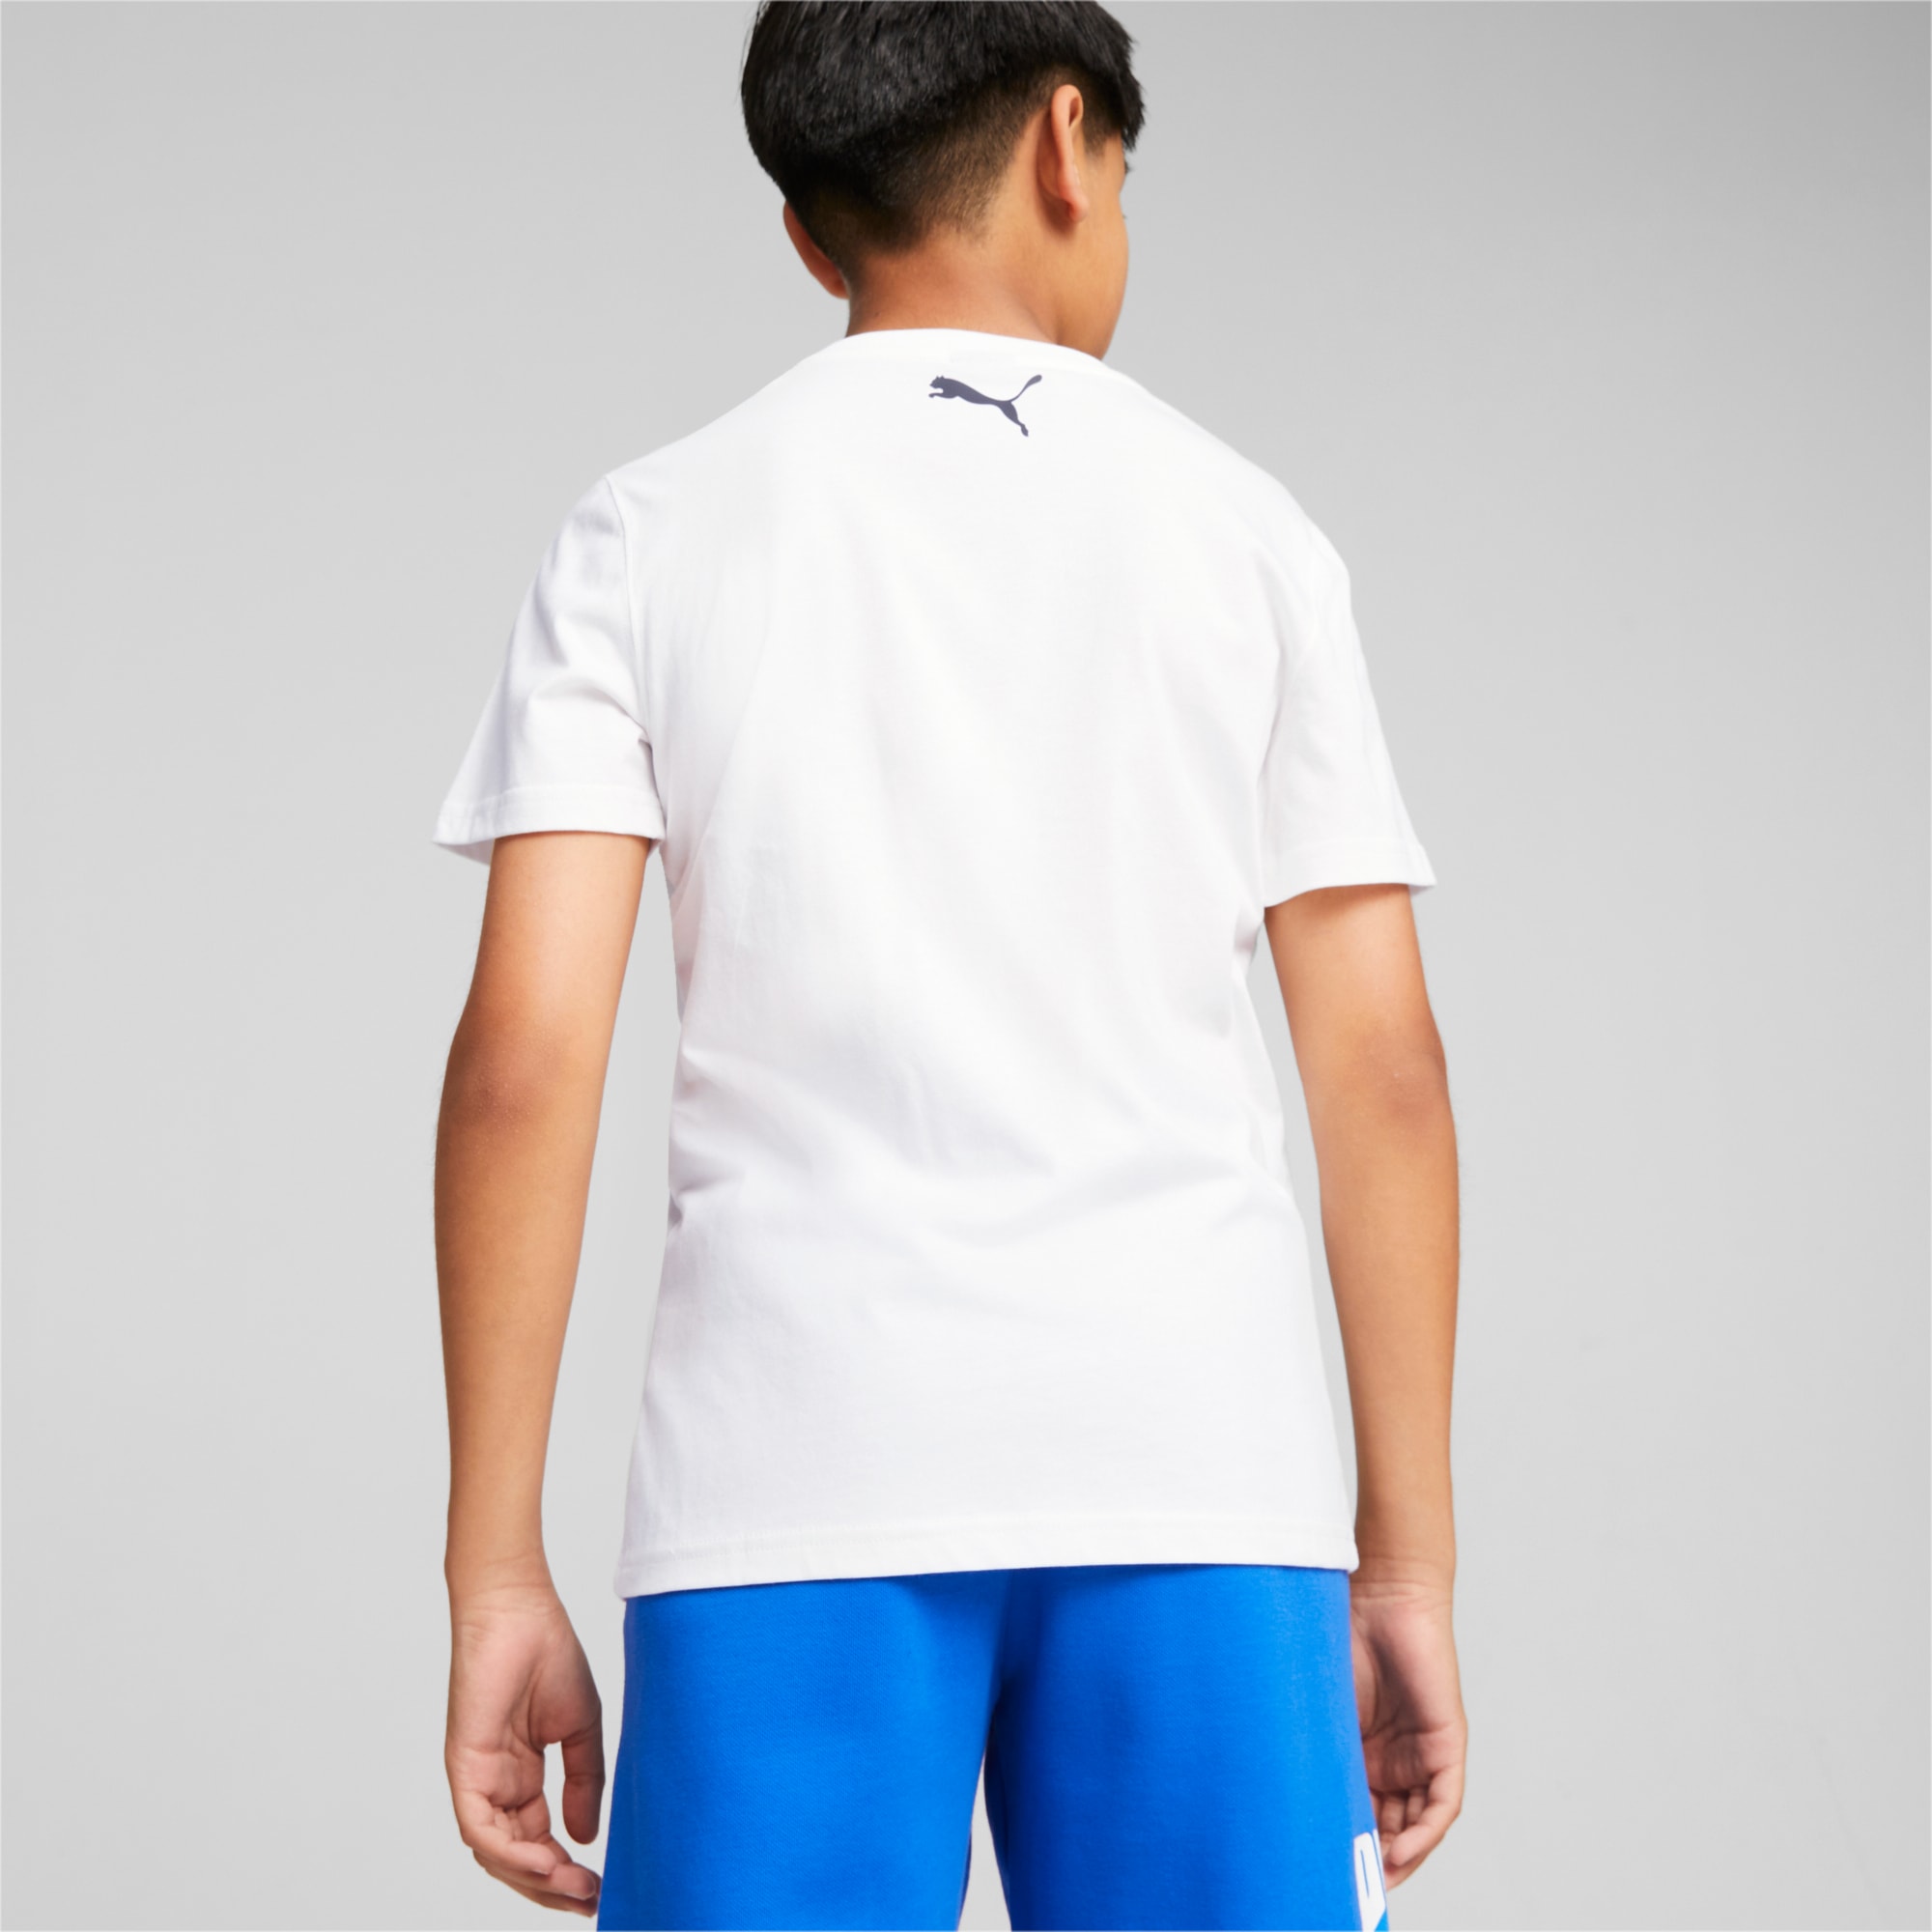 PUMA Basketball Graphic Youth T-Shirt, White